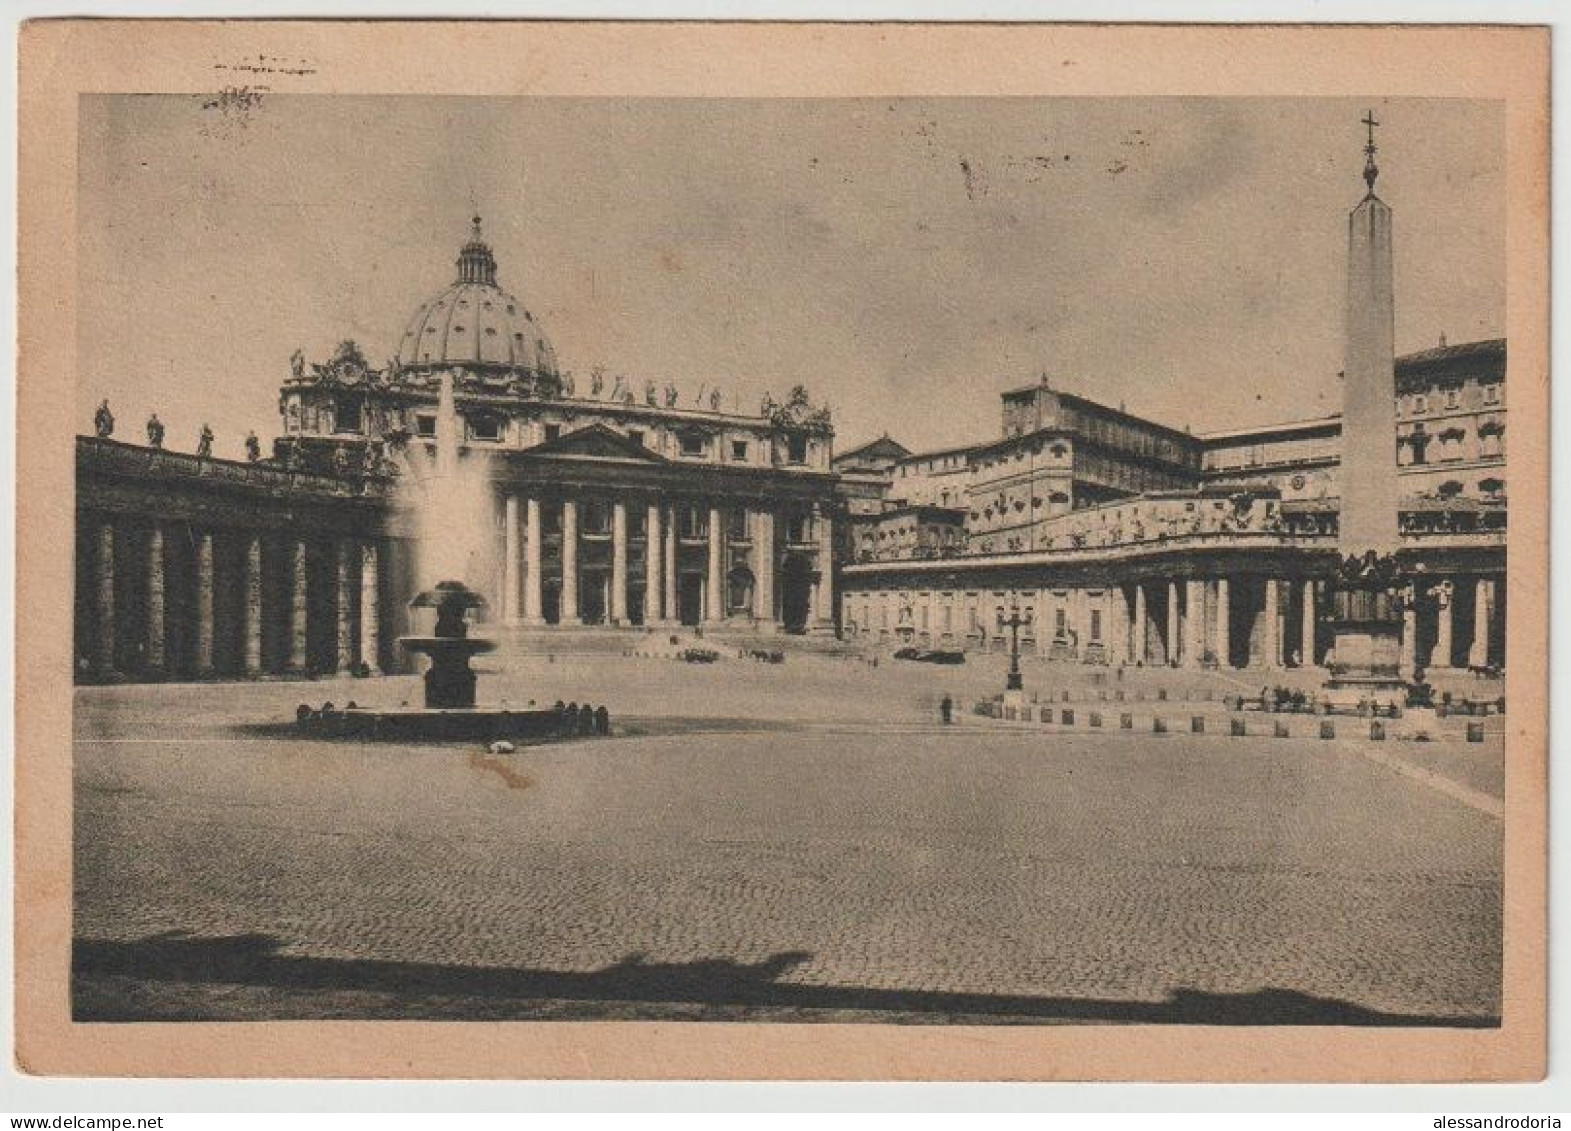 Cartolina Viaggiata Affrancata Roma Piazza San Pietro 1946 Francobollo 2 Lire - San Pietro